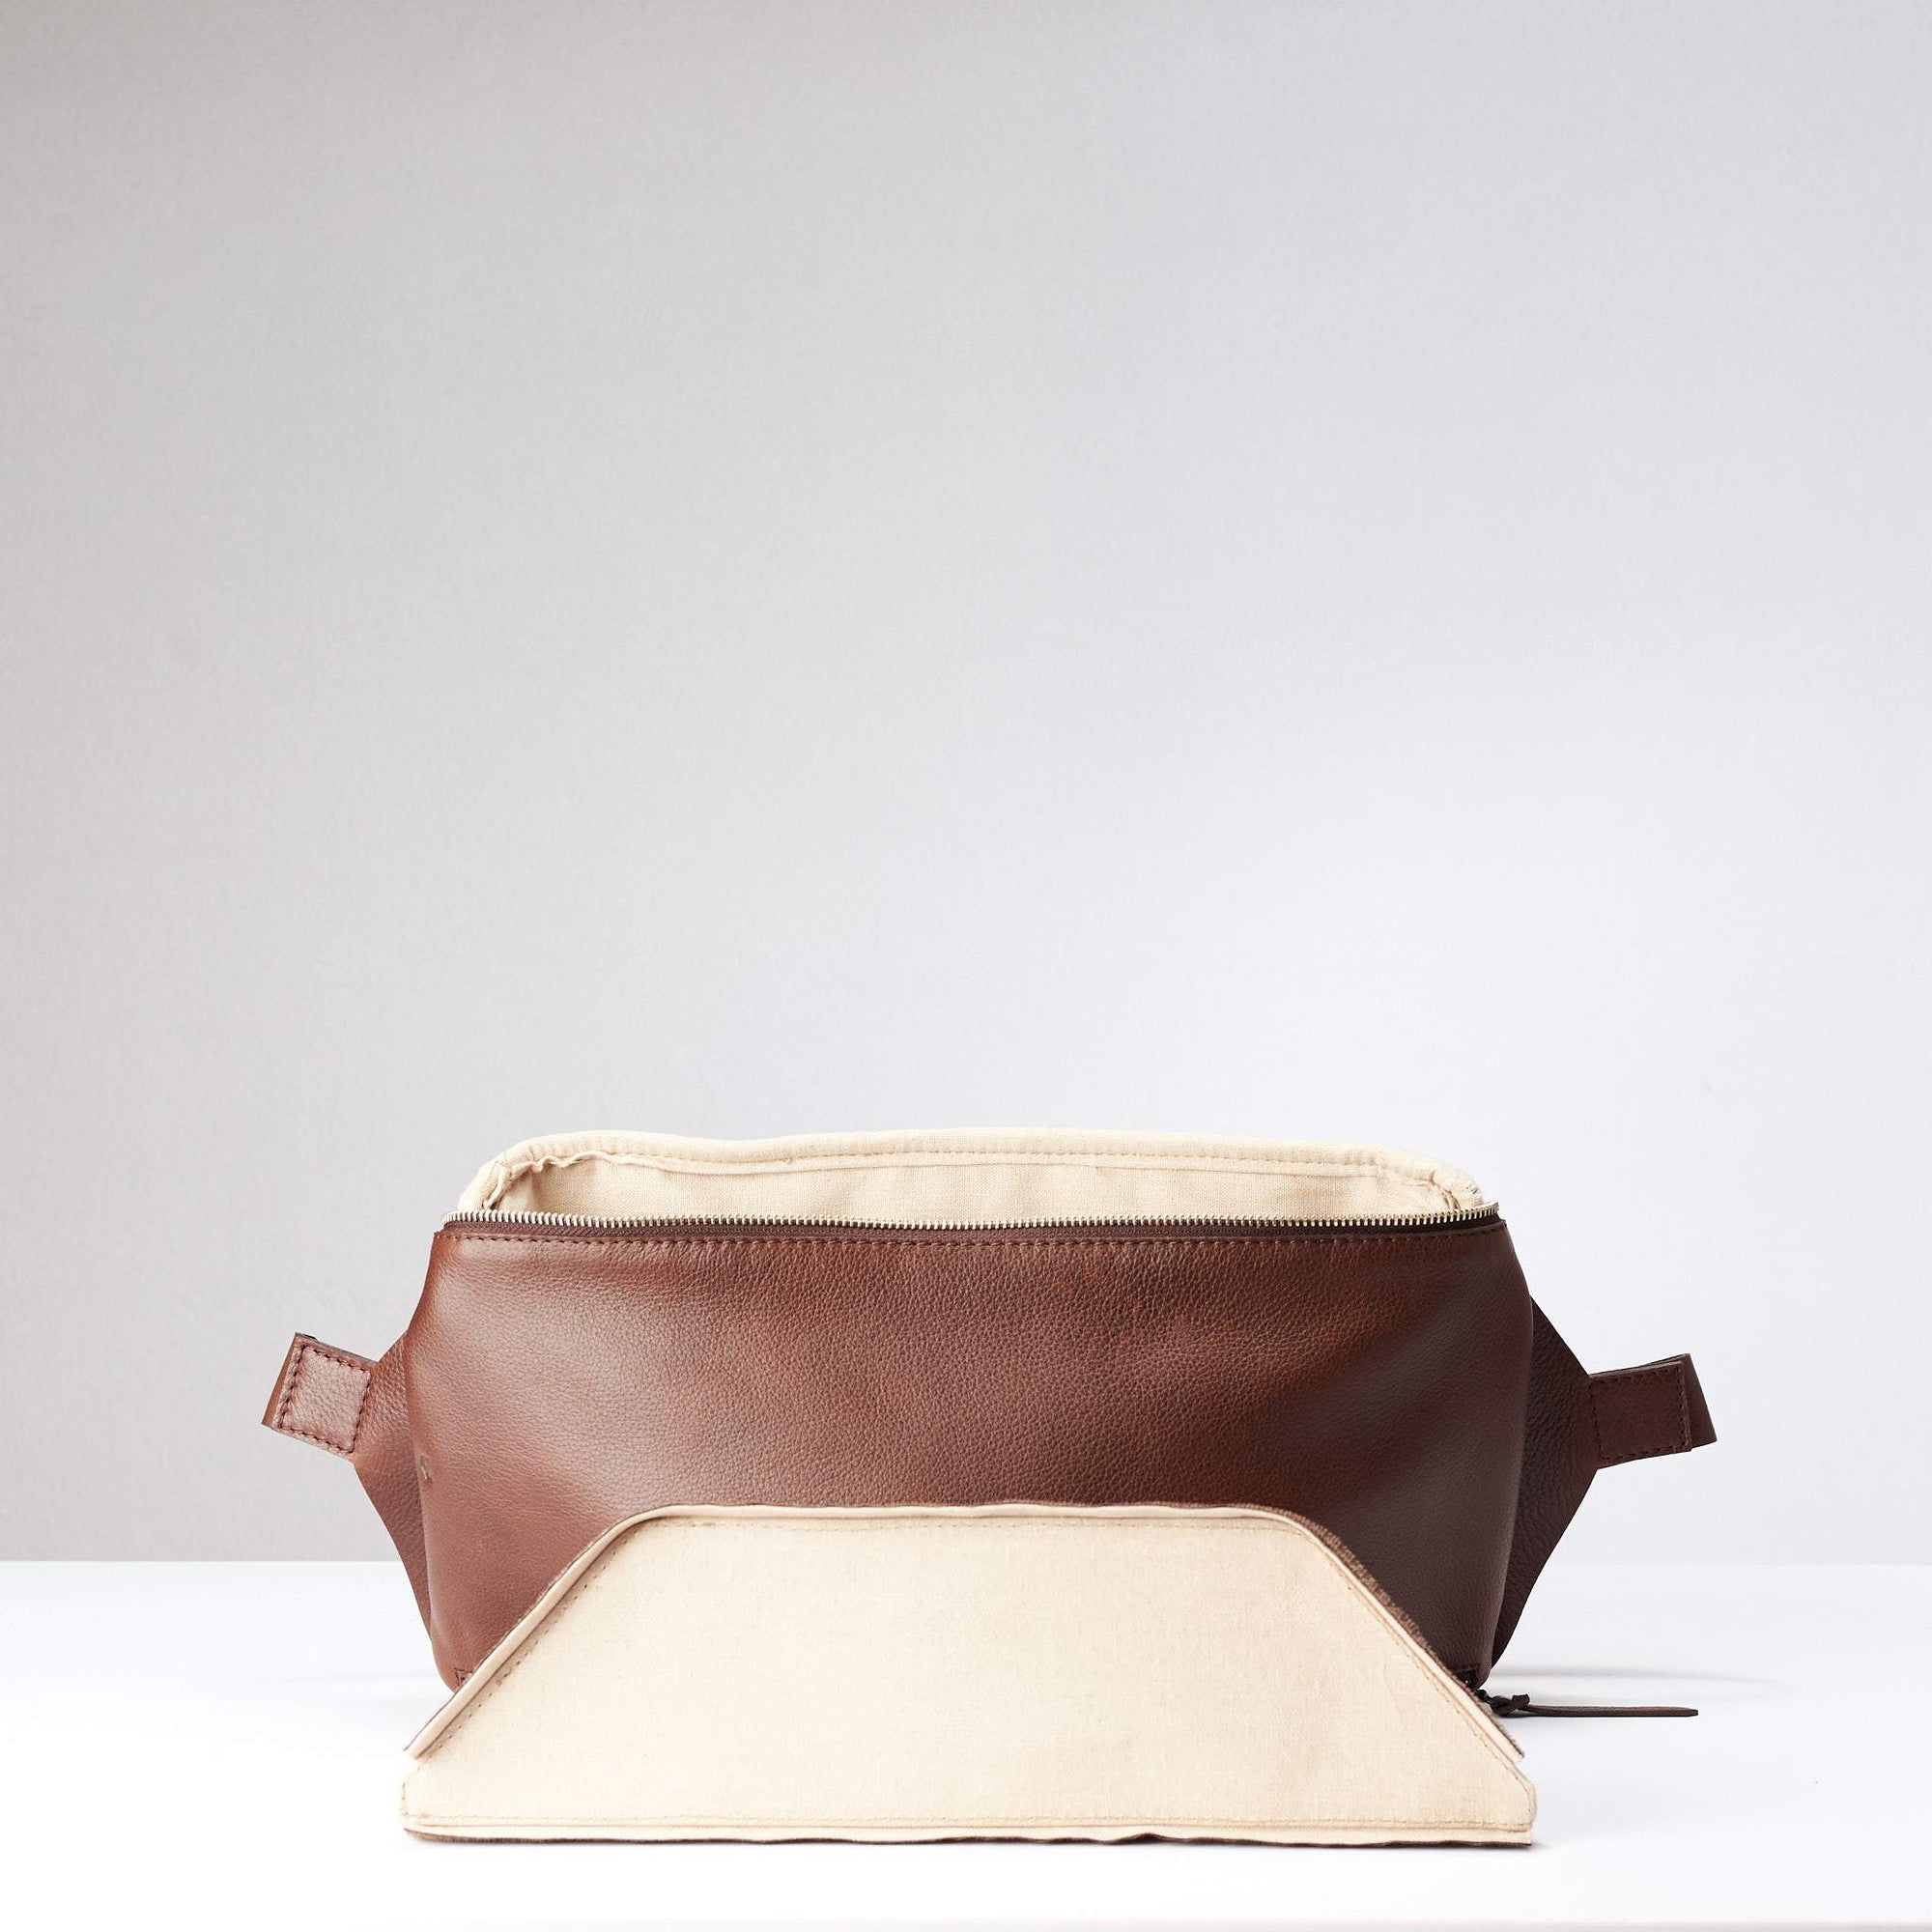 Detachable divider. Fenek Sling Bag Brown by Capra Leather